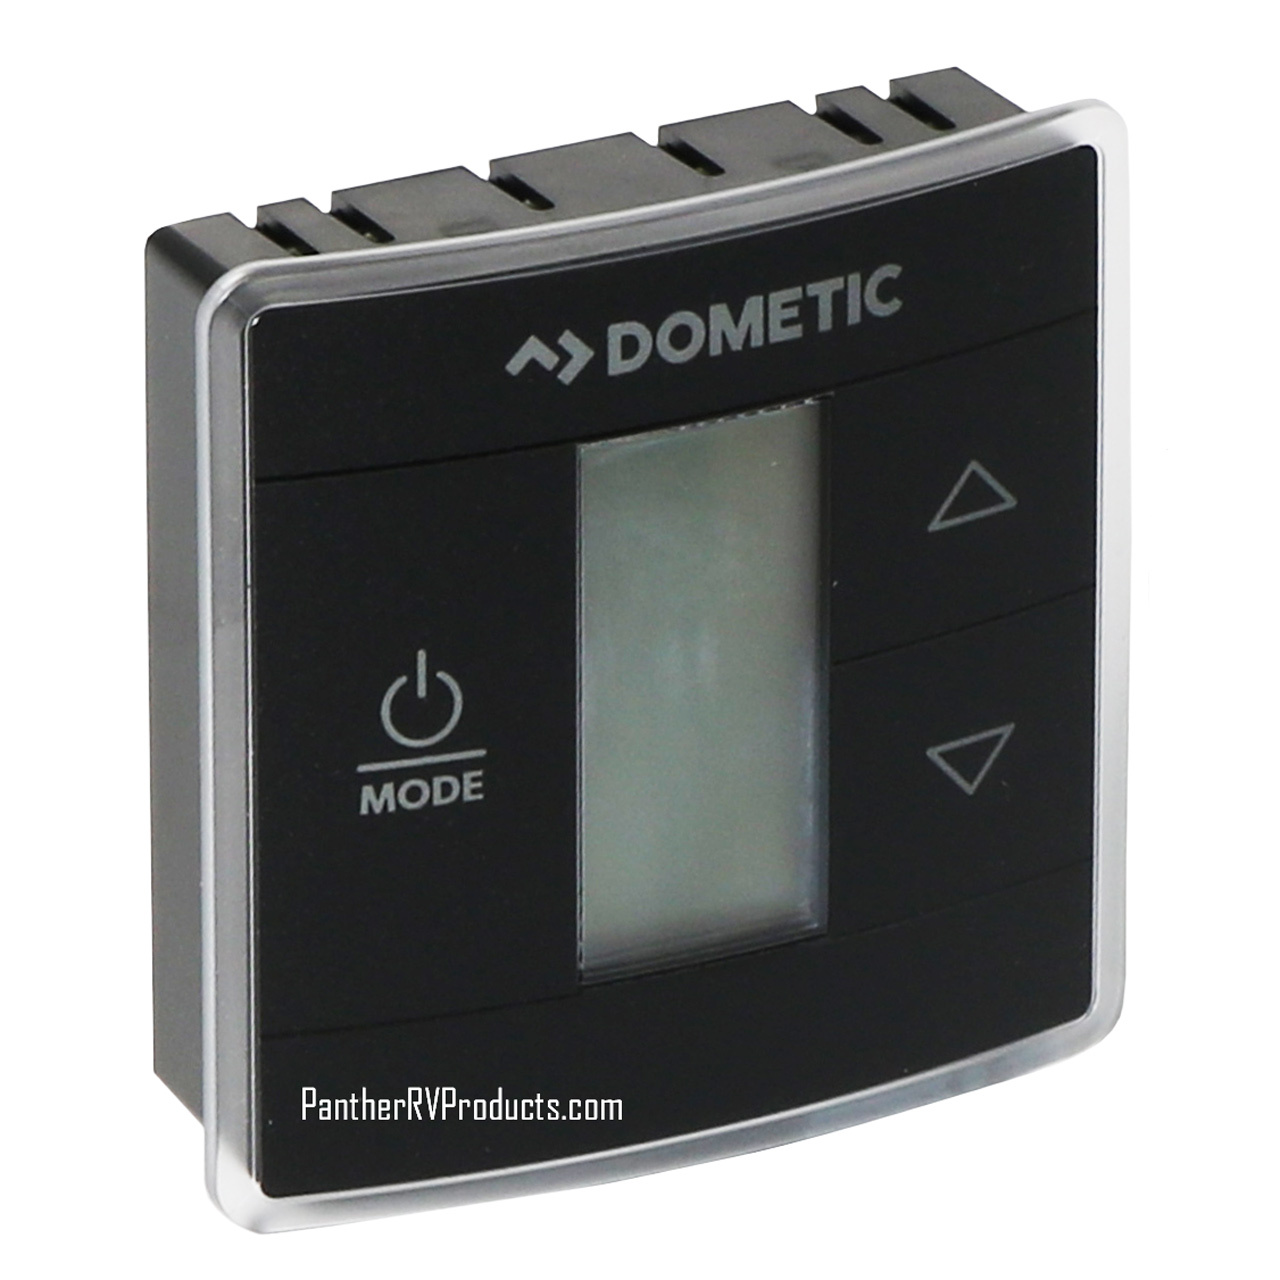 Buy DOMETIC 3314082000 Thermostat Online in Vietnam. B00CXB7BVU